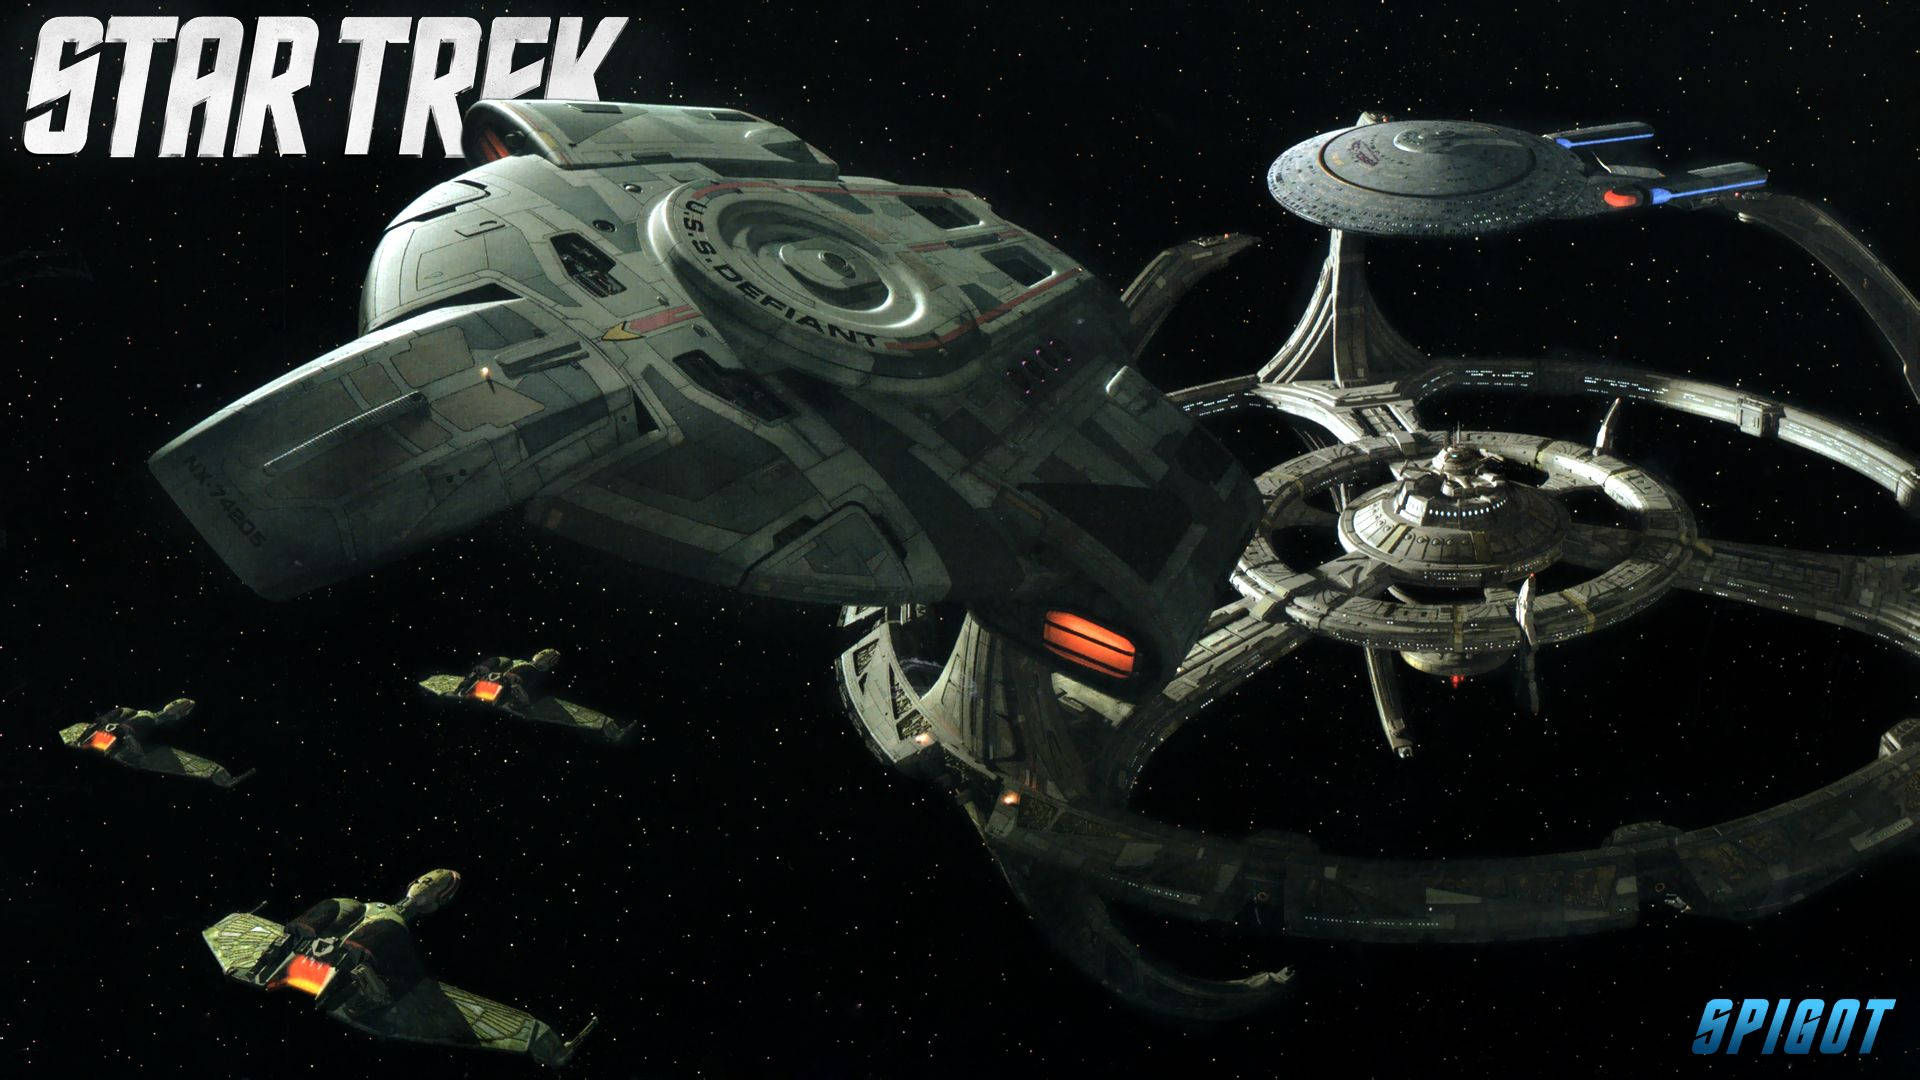 Star Trek Starship Uss Defiant At Station